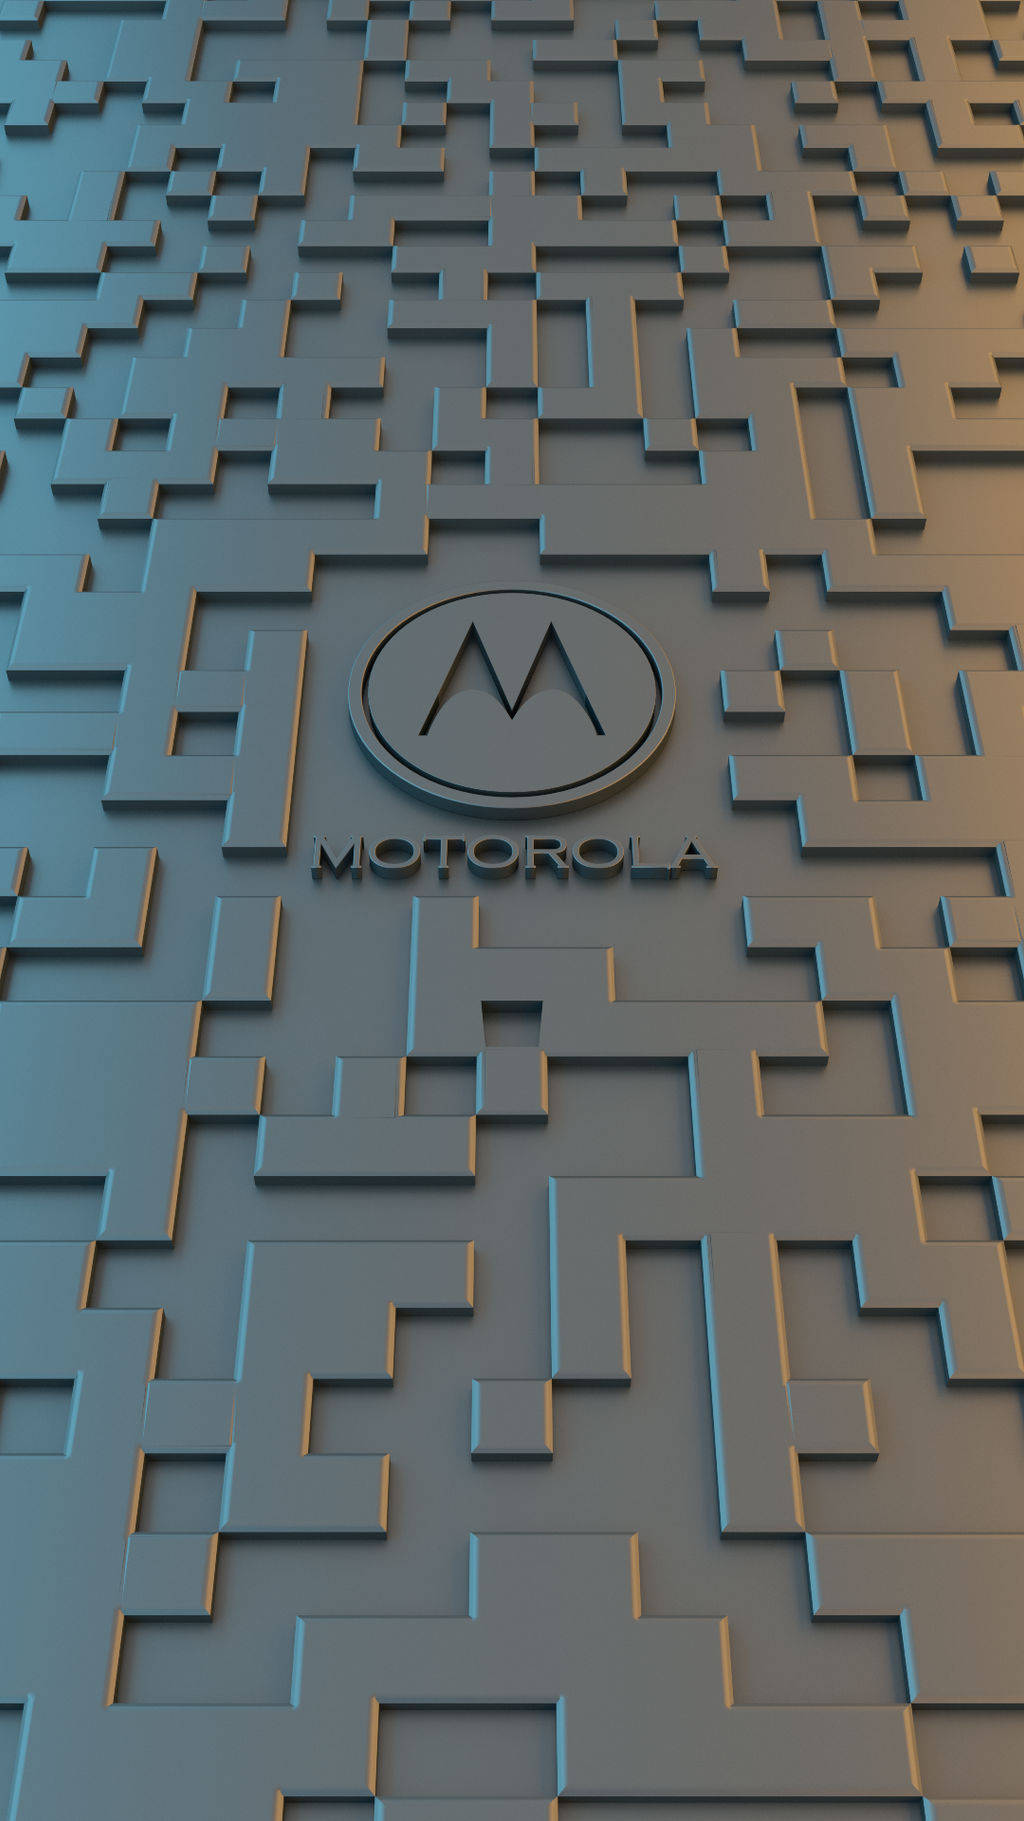 Motorola Maze Wall Wallpaper